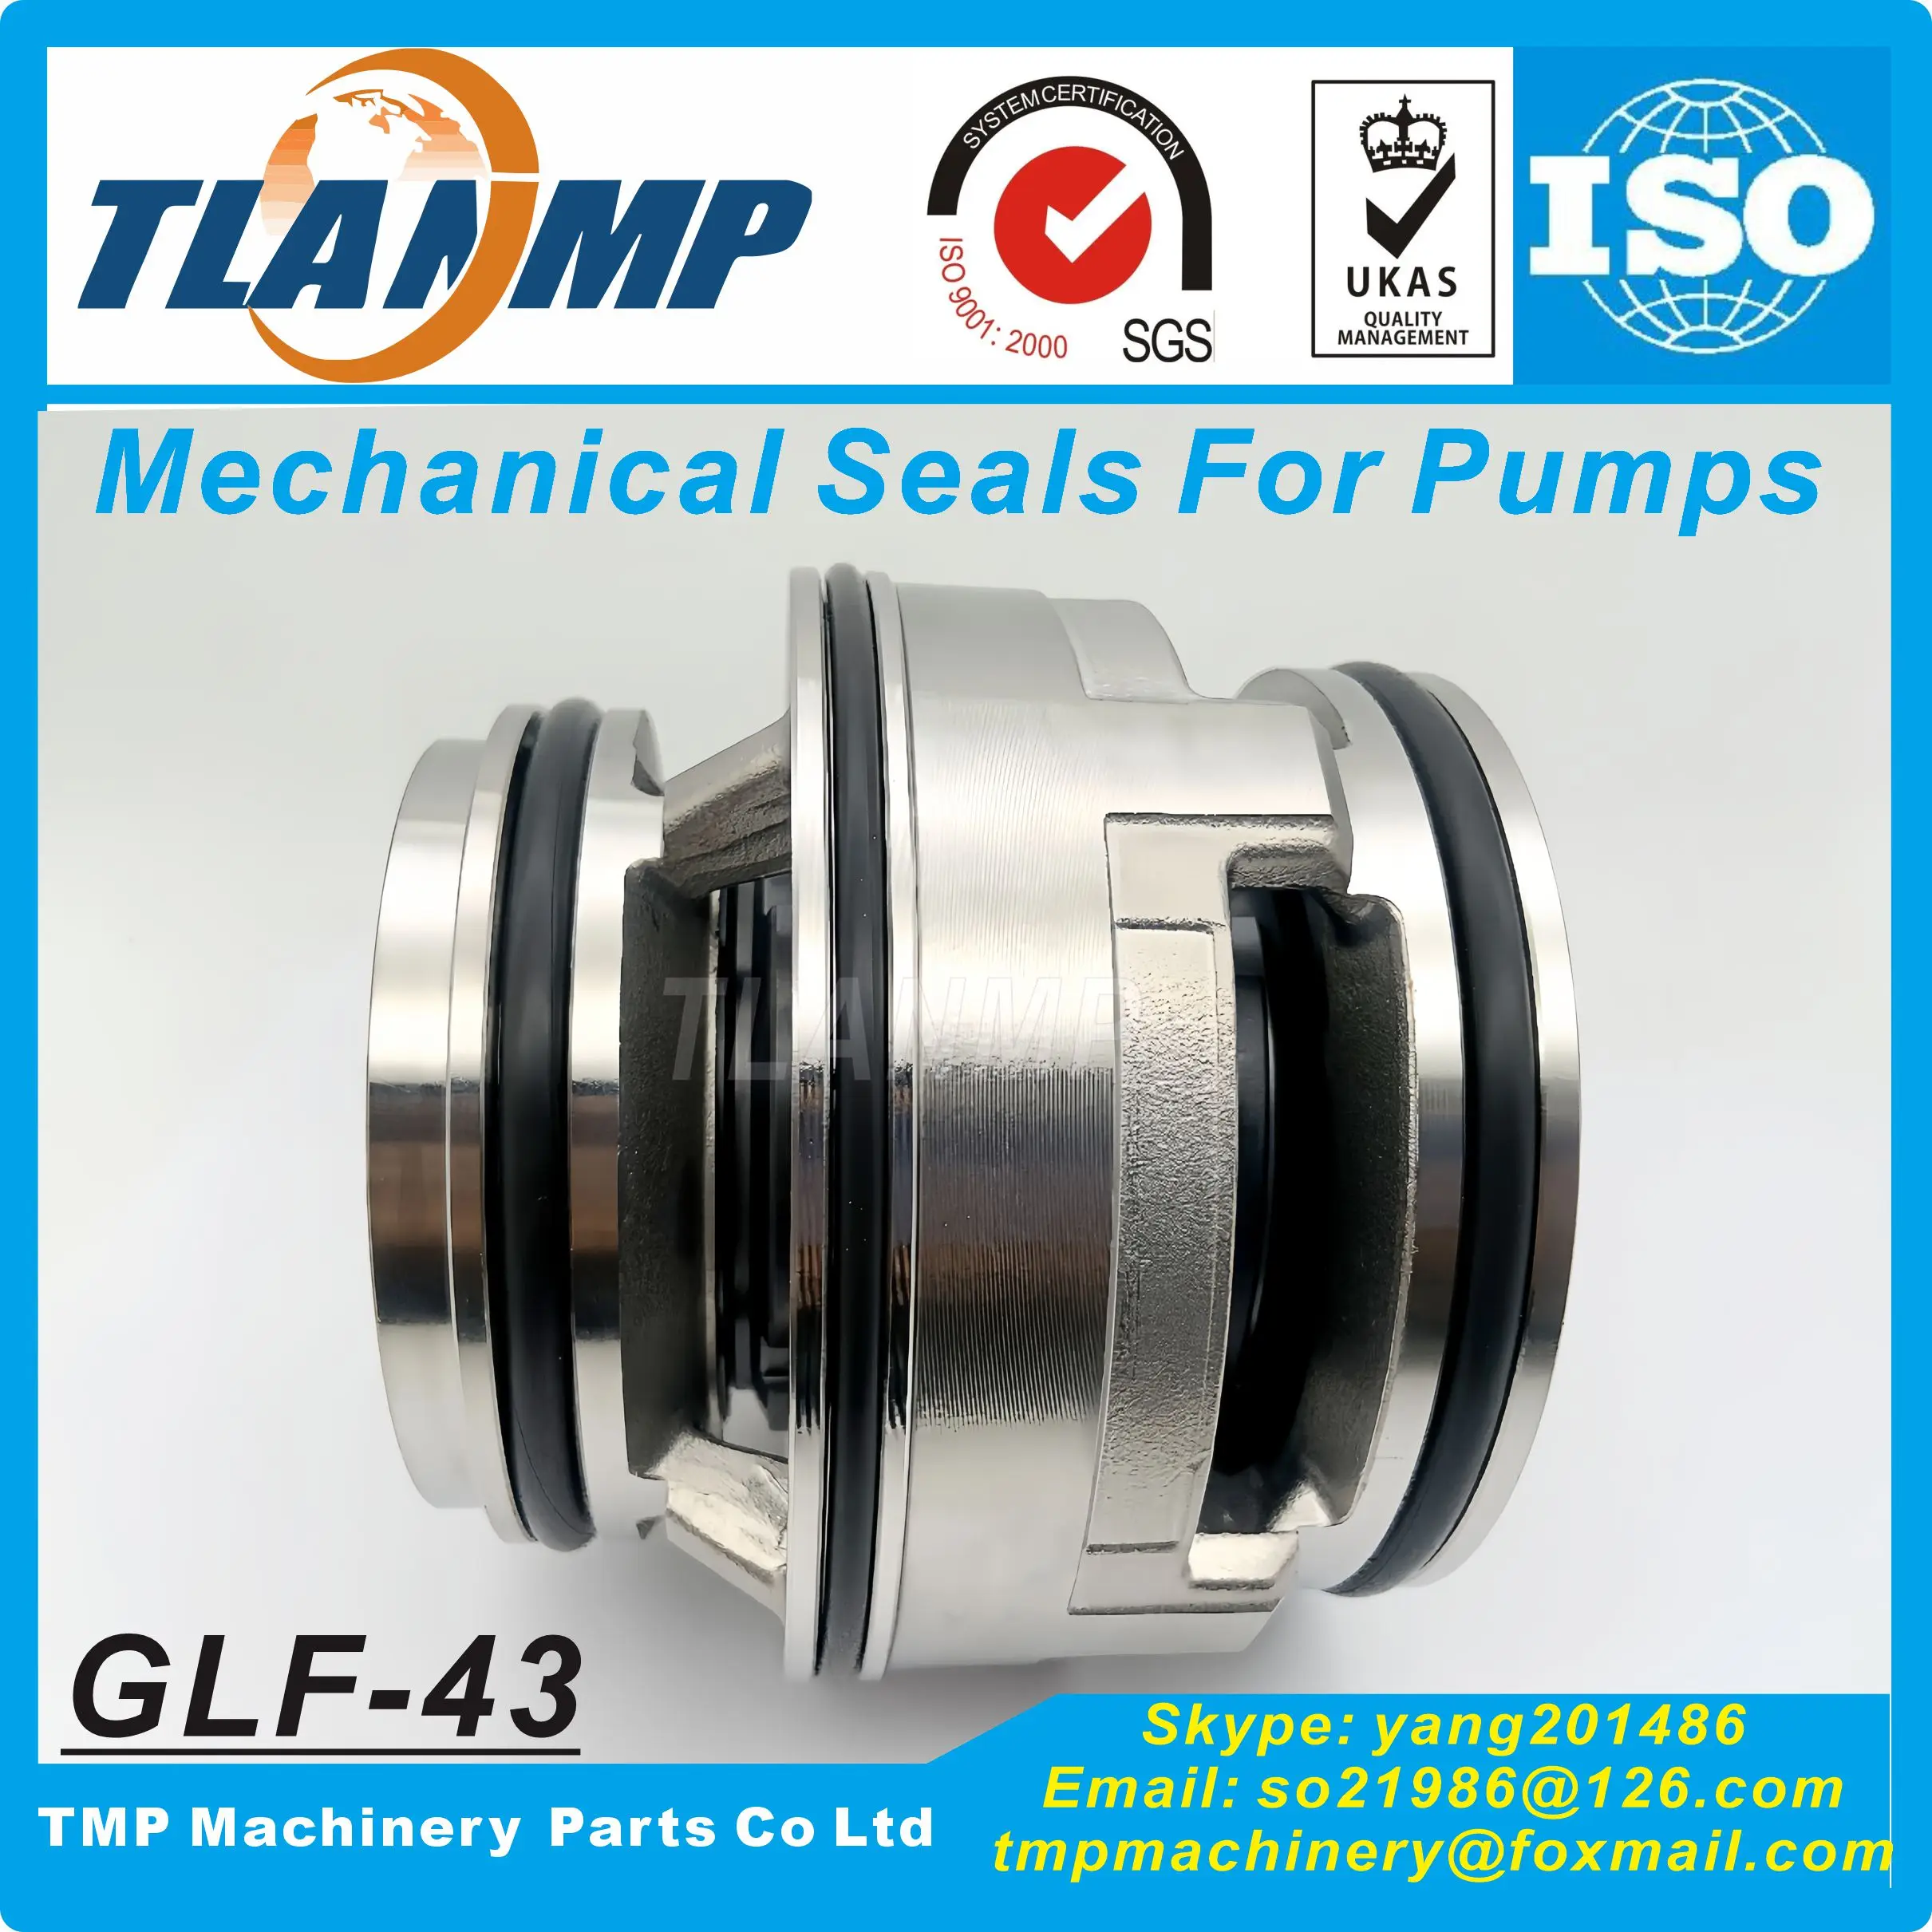 GLF-43 , Sarlin-43 Cartridge TLANMP Mechanical Seals (Shaft Size 43mm, PN: 96952242 ) for SL Series Pumps, SARLIN Sewage Pumps